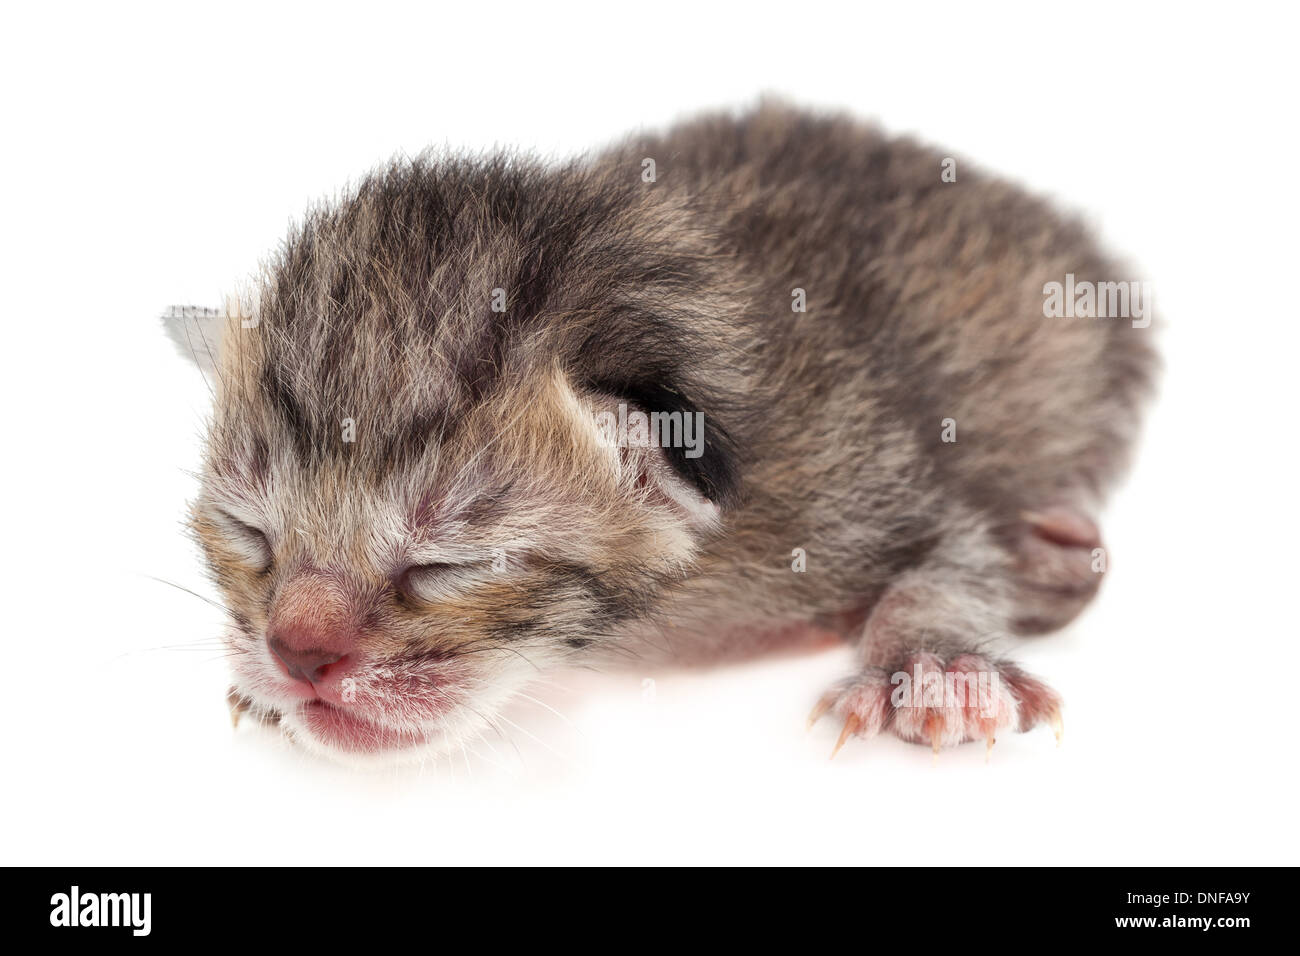 New born baby cat on white background Stock Photo